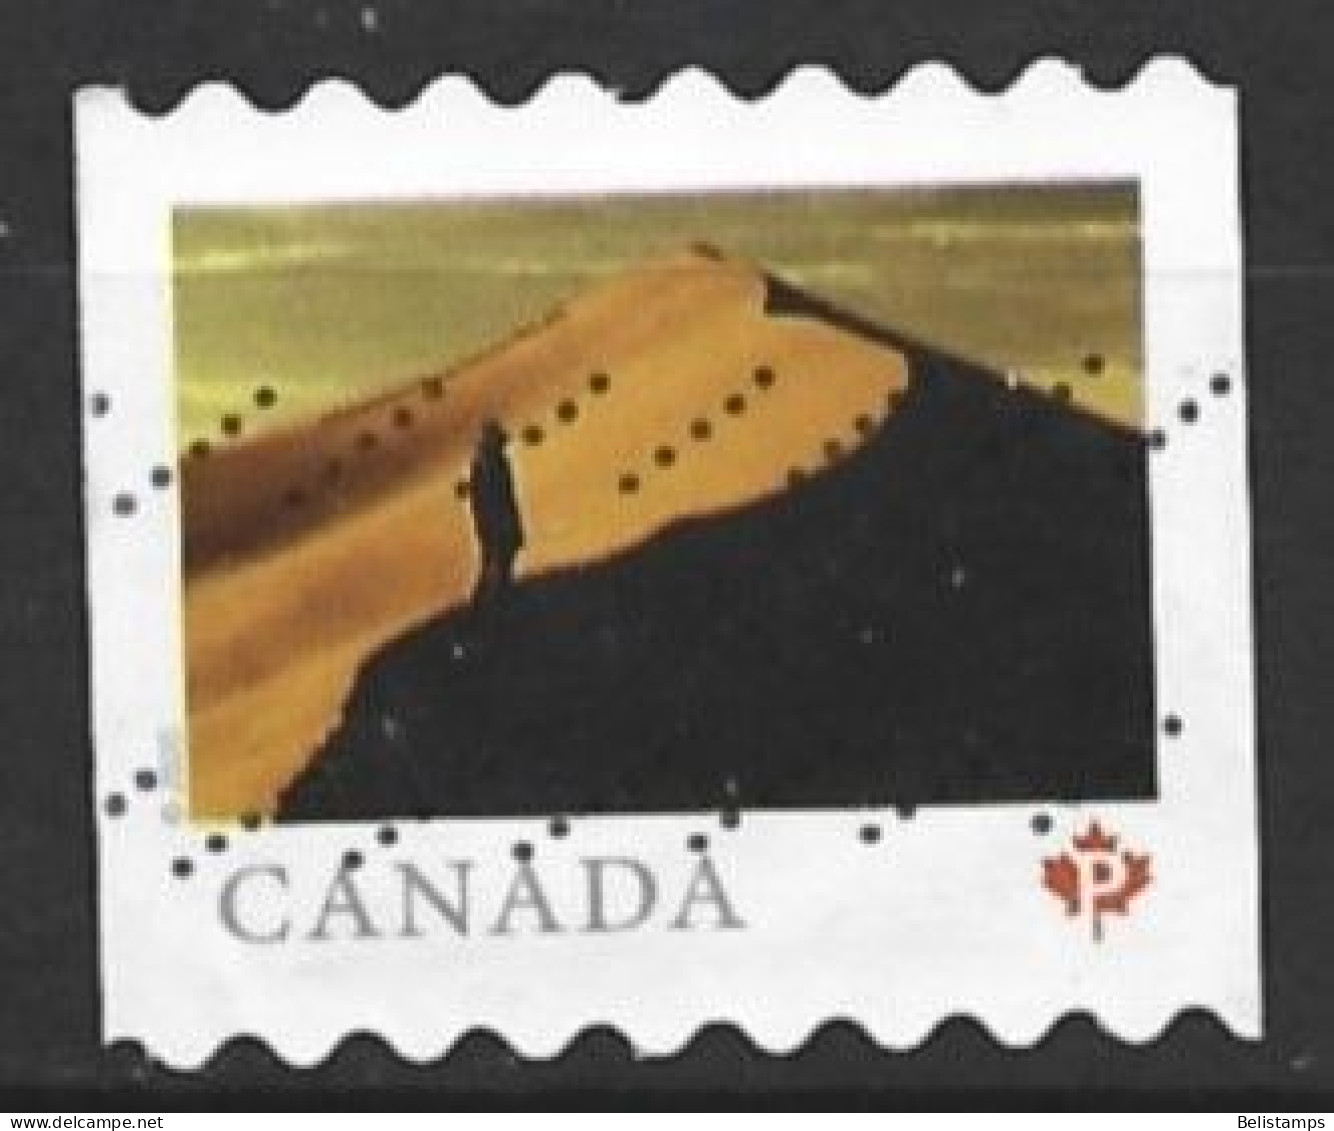 Canada 2020. Scott #3213 (U) Athabasca Sand Dunes, Provincial Park, Saskatchewan - Gebruikt